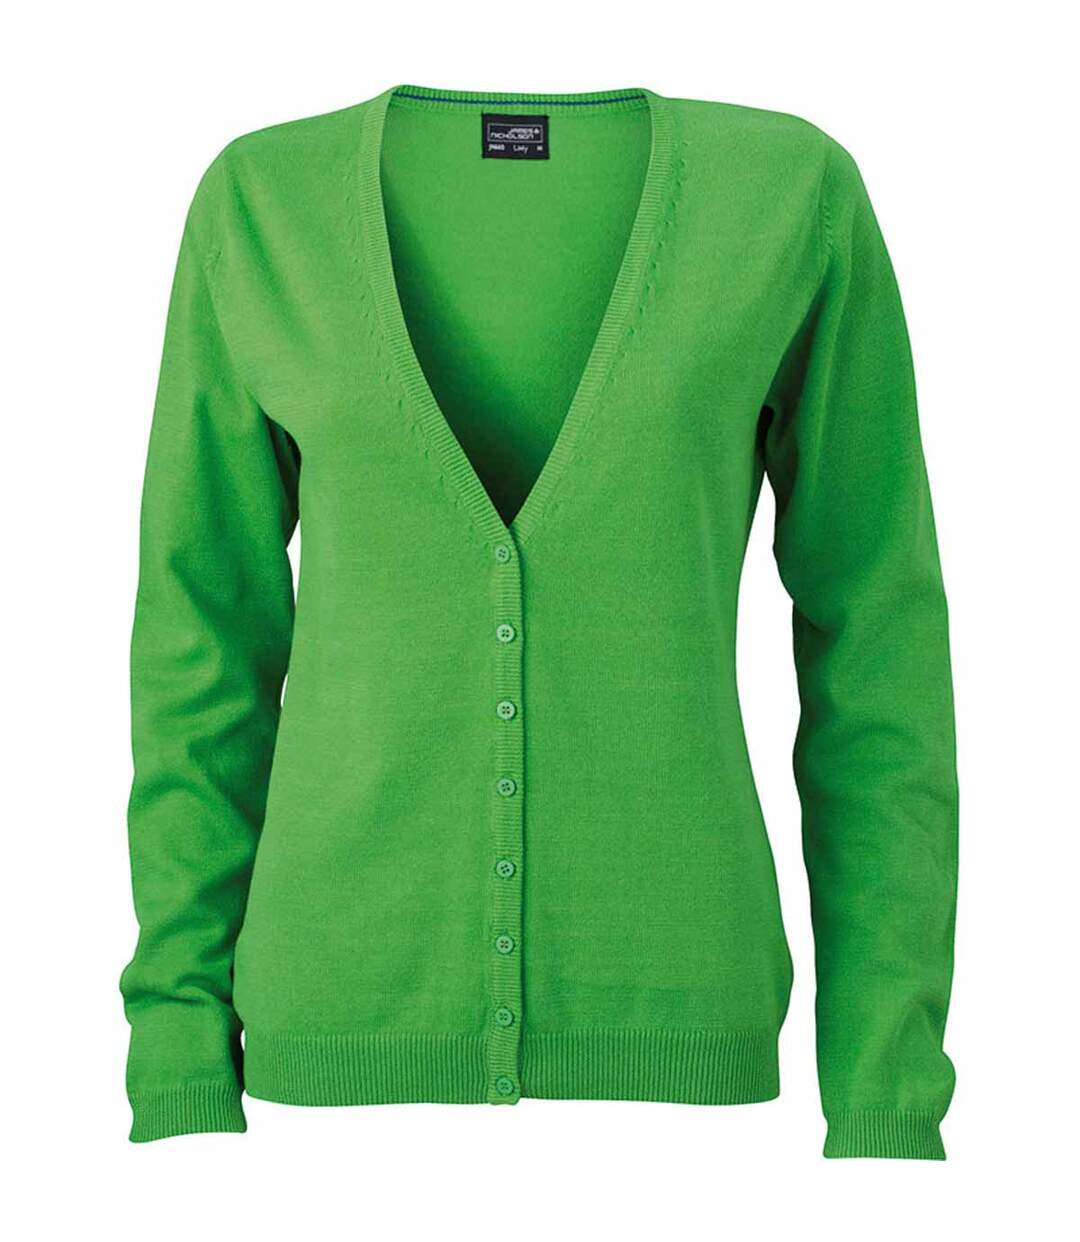 Gilet boutonné cardigan - FEMME - JN660 - vert